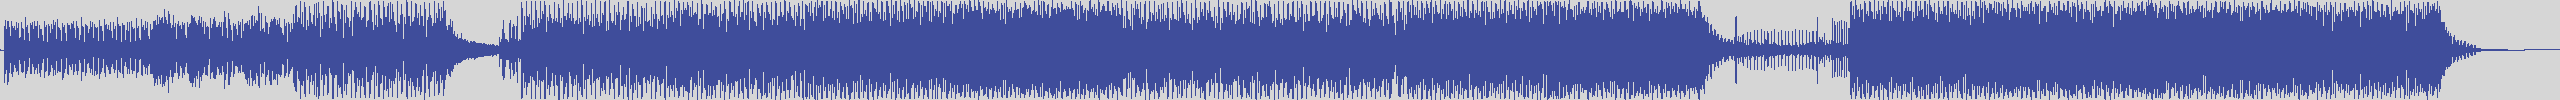 atomic_recordings [AR007] N-Rk - Spritit of House [Visnadi Radio Mix] audio wave form